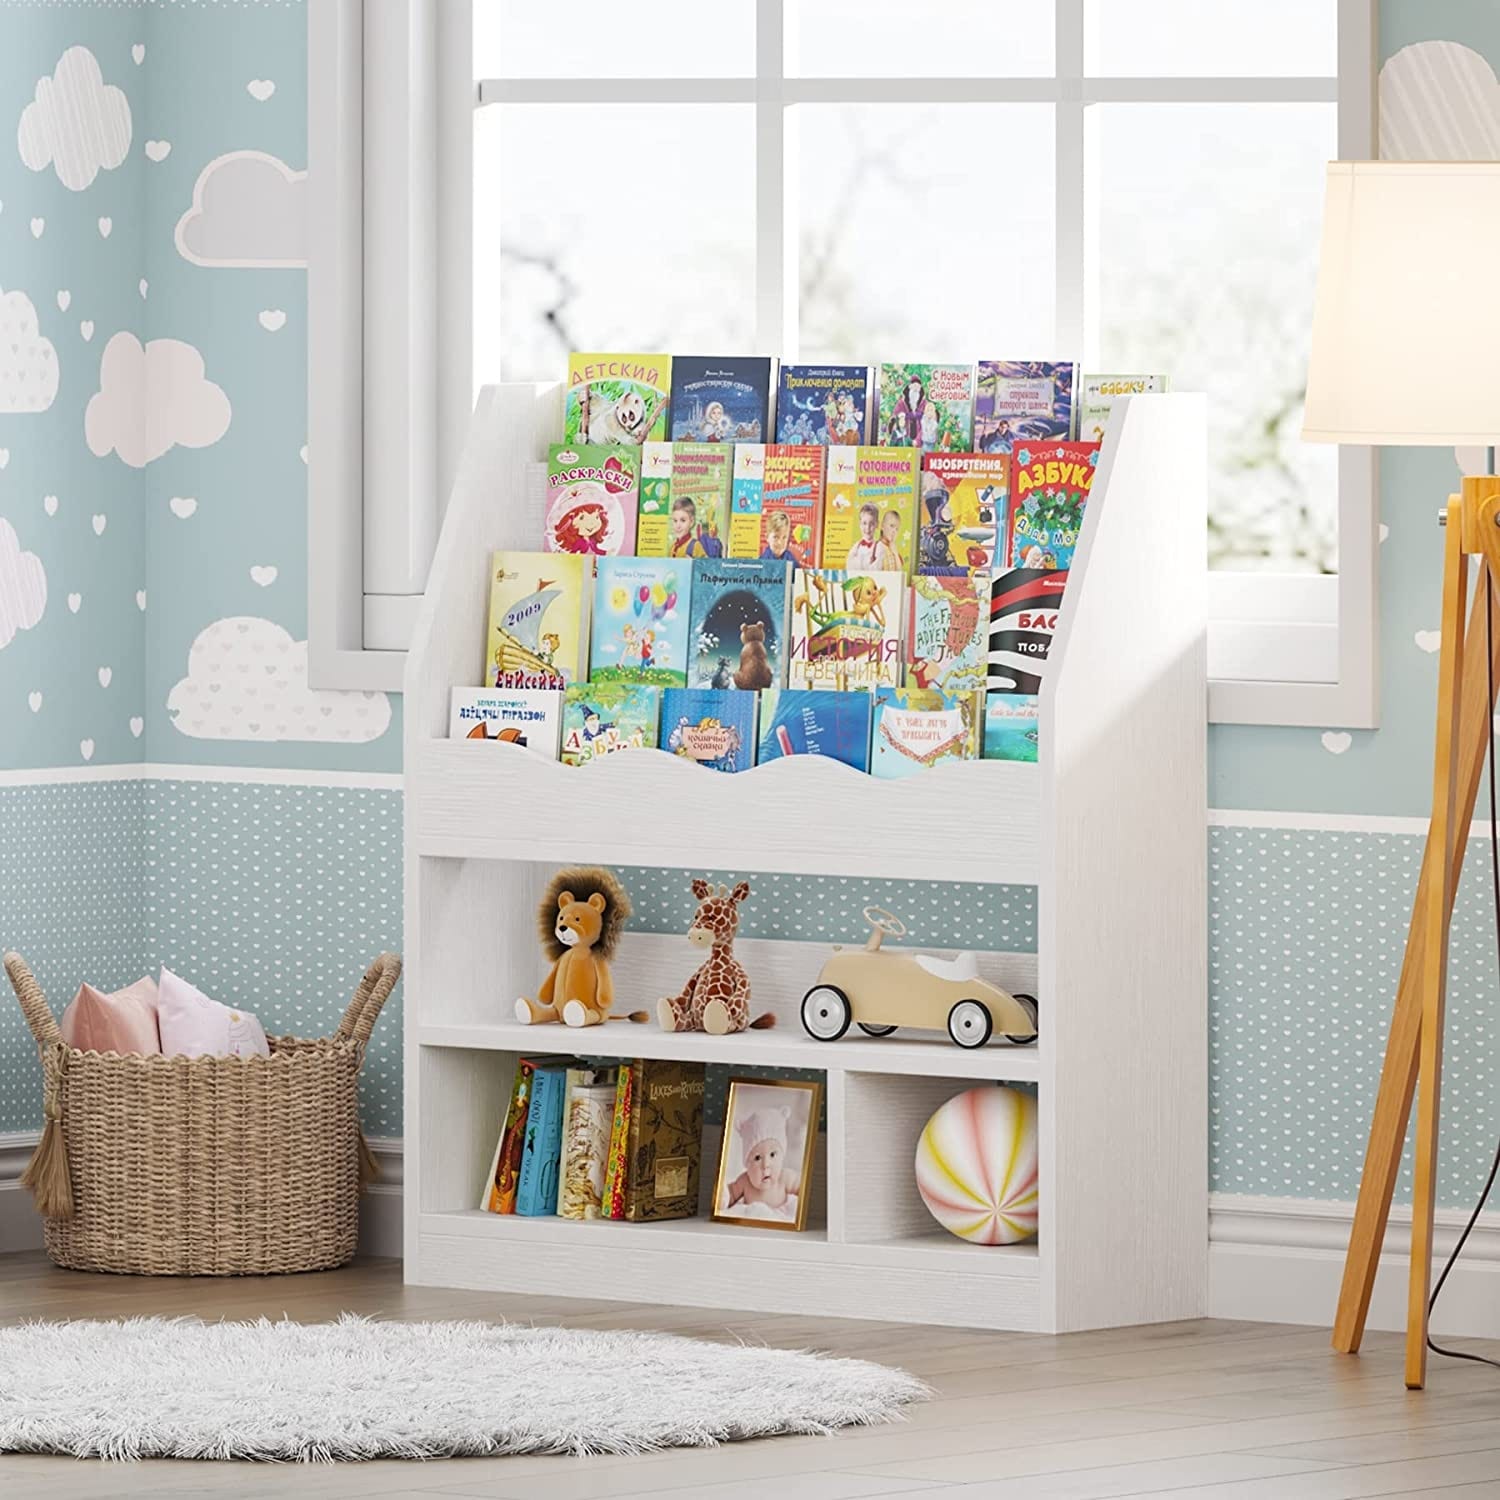 https://ak1.ostkcdn.com/images/products/is/images/direct/0cf9b0c54fcf2ac6c8f9700bd2b289dec81fba47/Kids-Bookshelf%2C-Children%27s-Bookcase-Display-Stand%2C-Kids-Toy-Storage-Organizer-Rack%2C-Wooden-White-Bookshelves-for-Kid%27s-Room.jpg